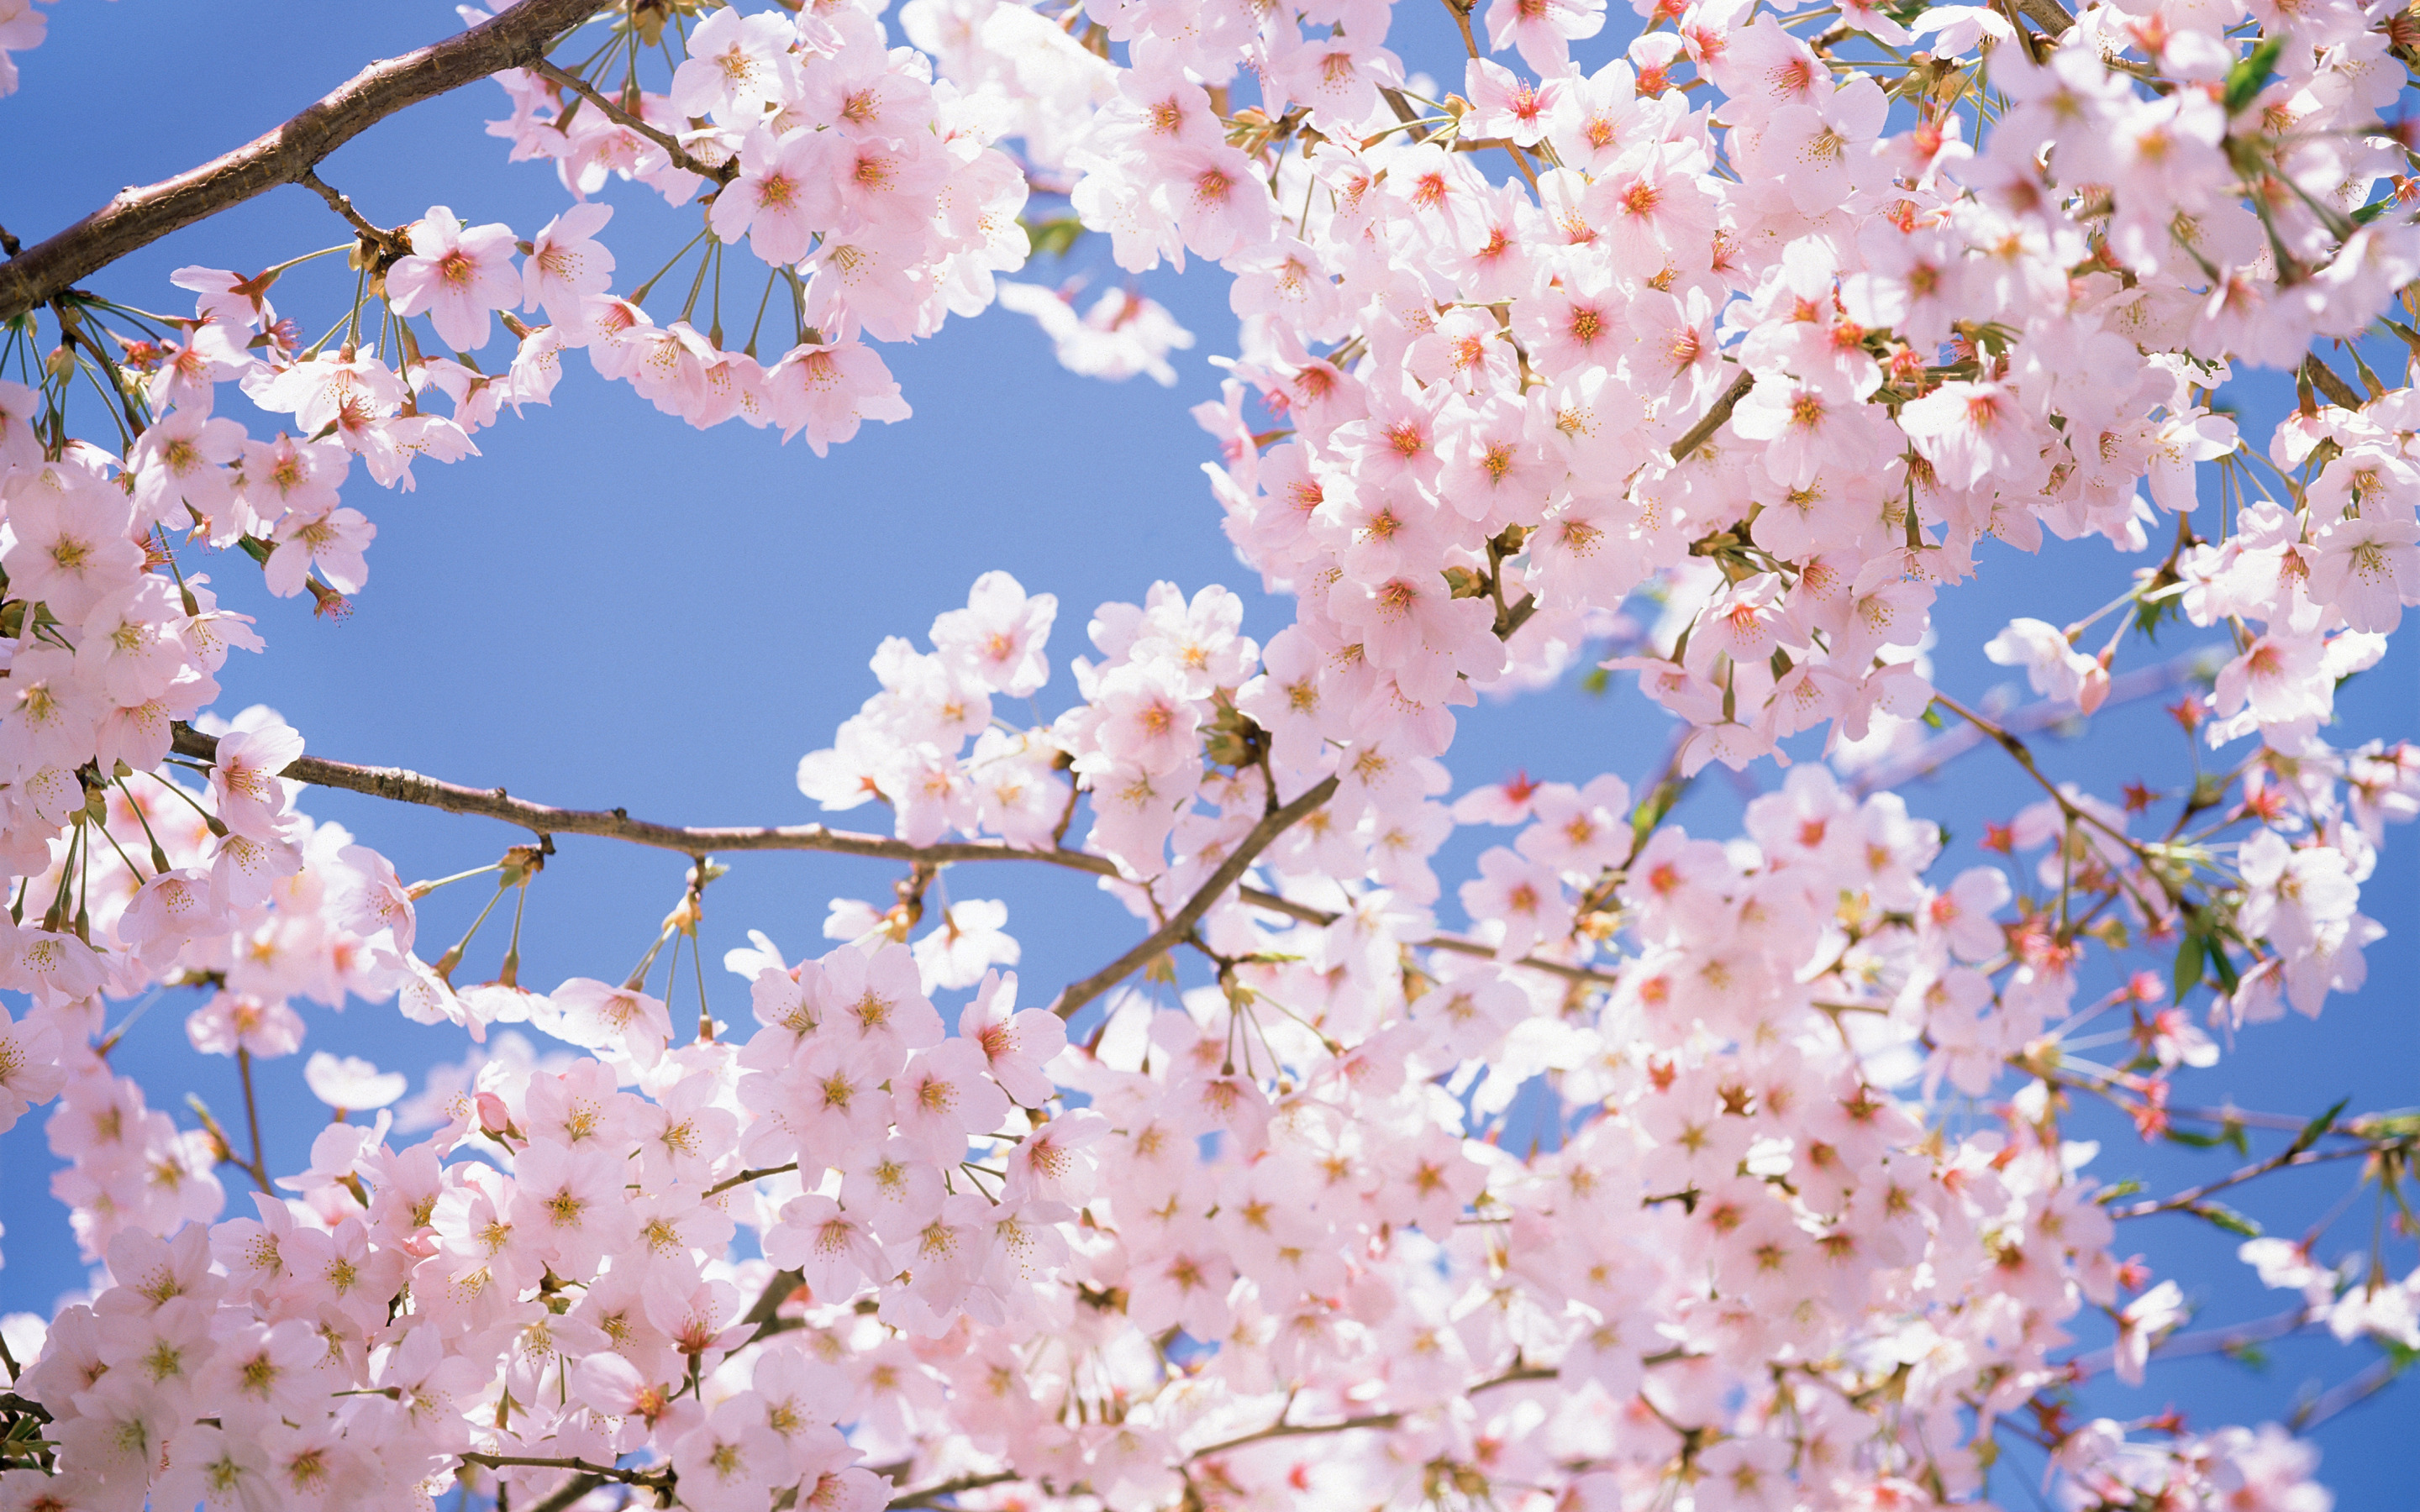 Sakura blossom. Черри блоссом. Сакура черри блоссом. Черри блоссом дерево. Сакура черри блоссом дерево.